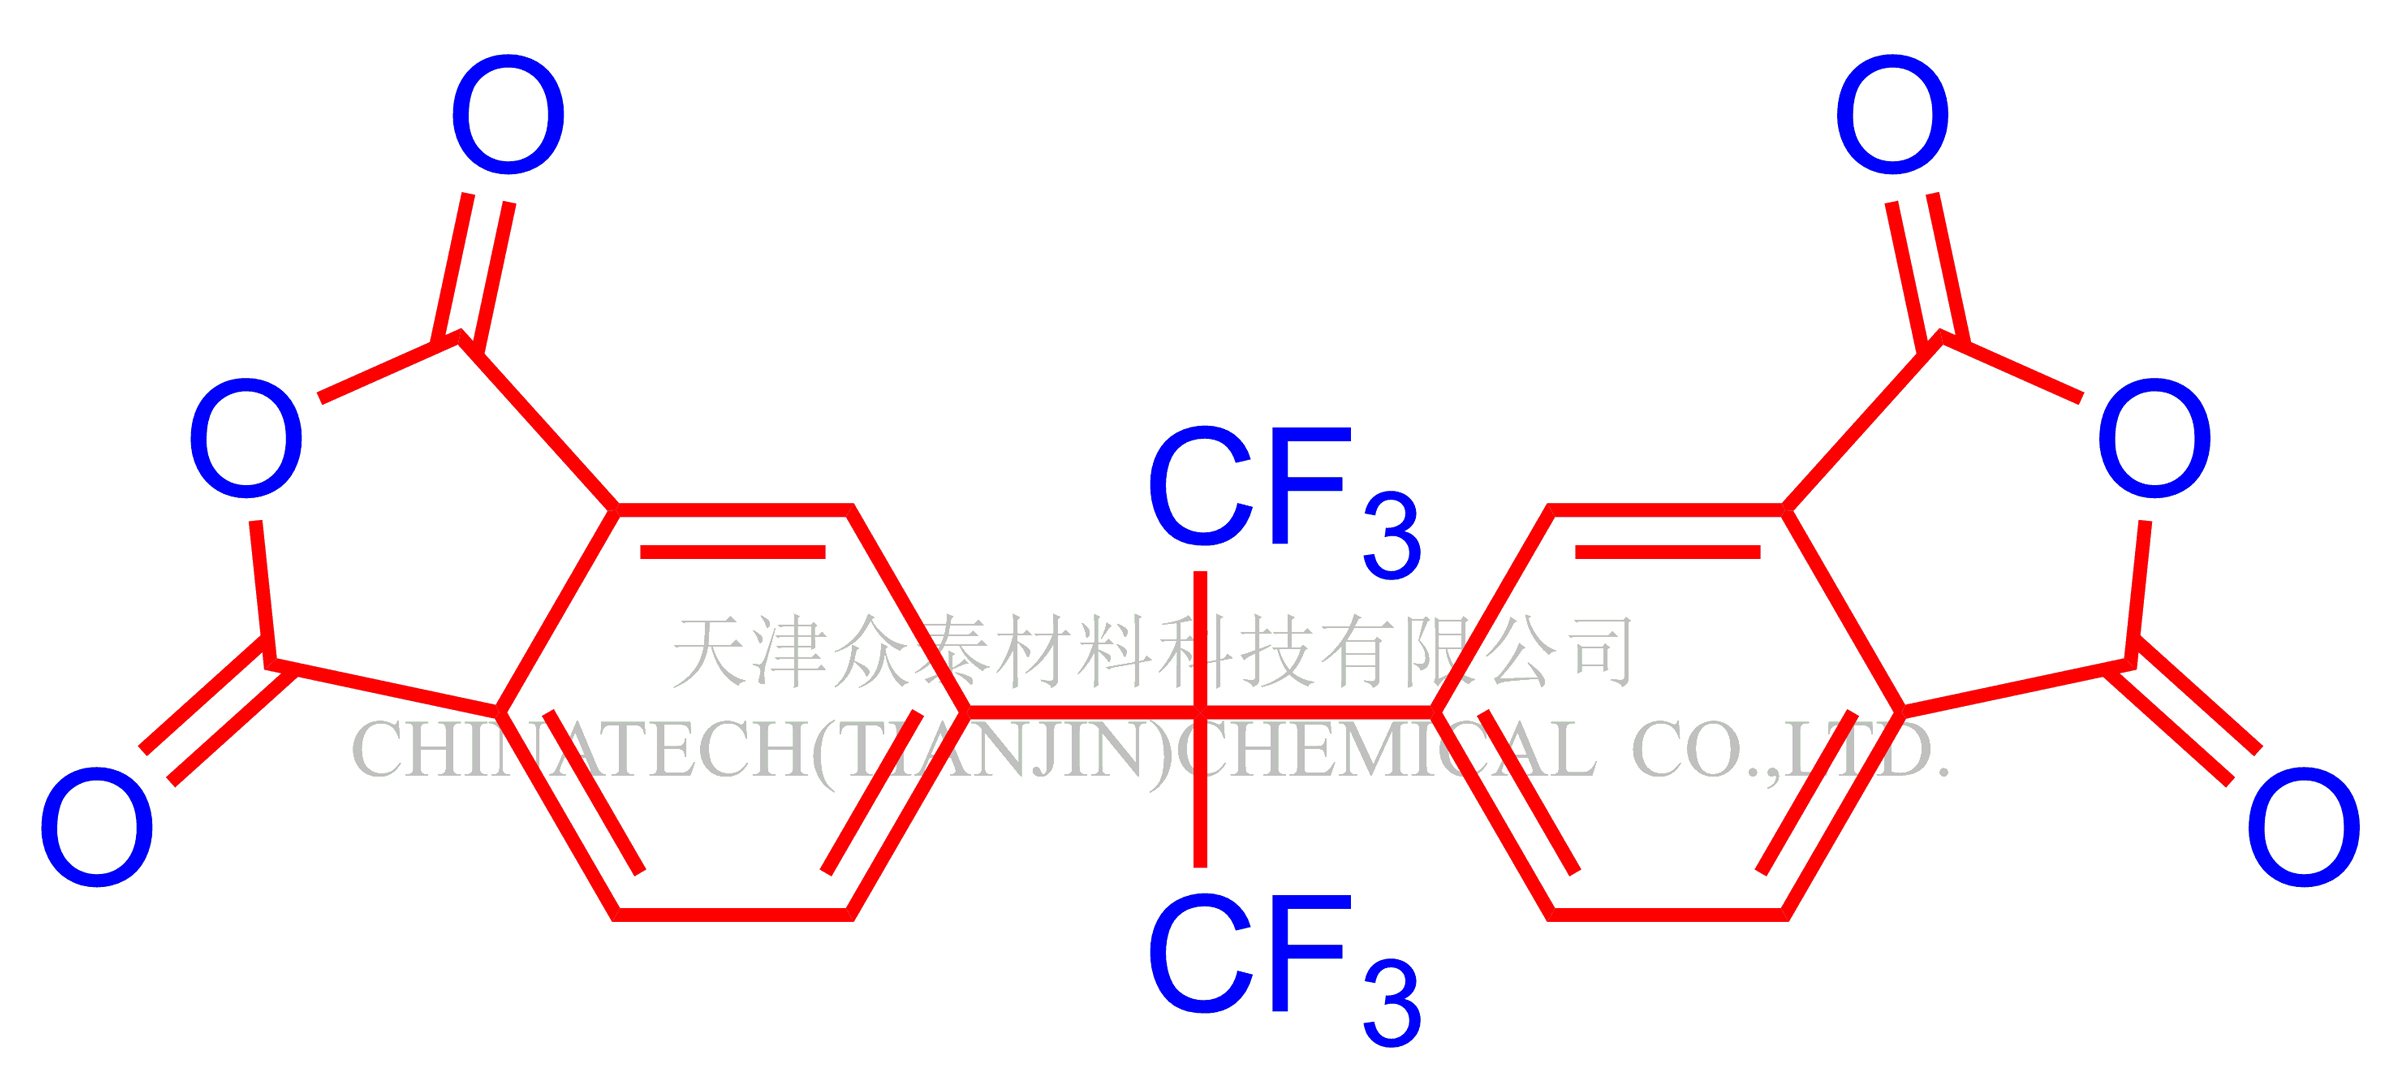 4,4'-(Hexafluoroisopropylidene) diphthalic anhydride (6FDA)